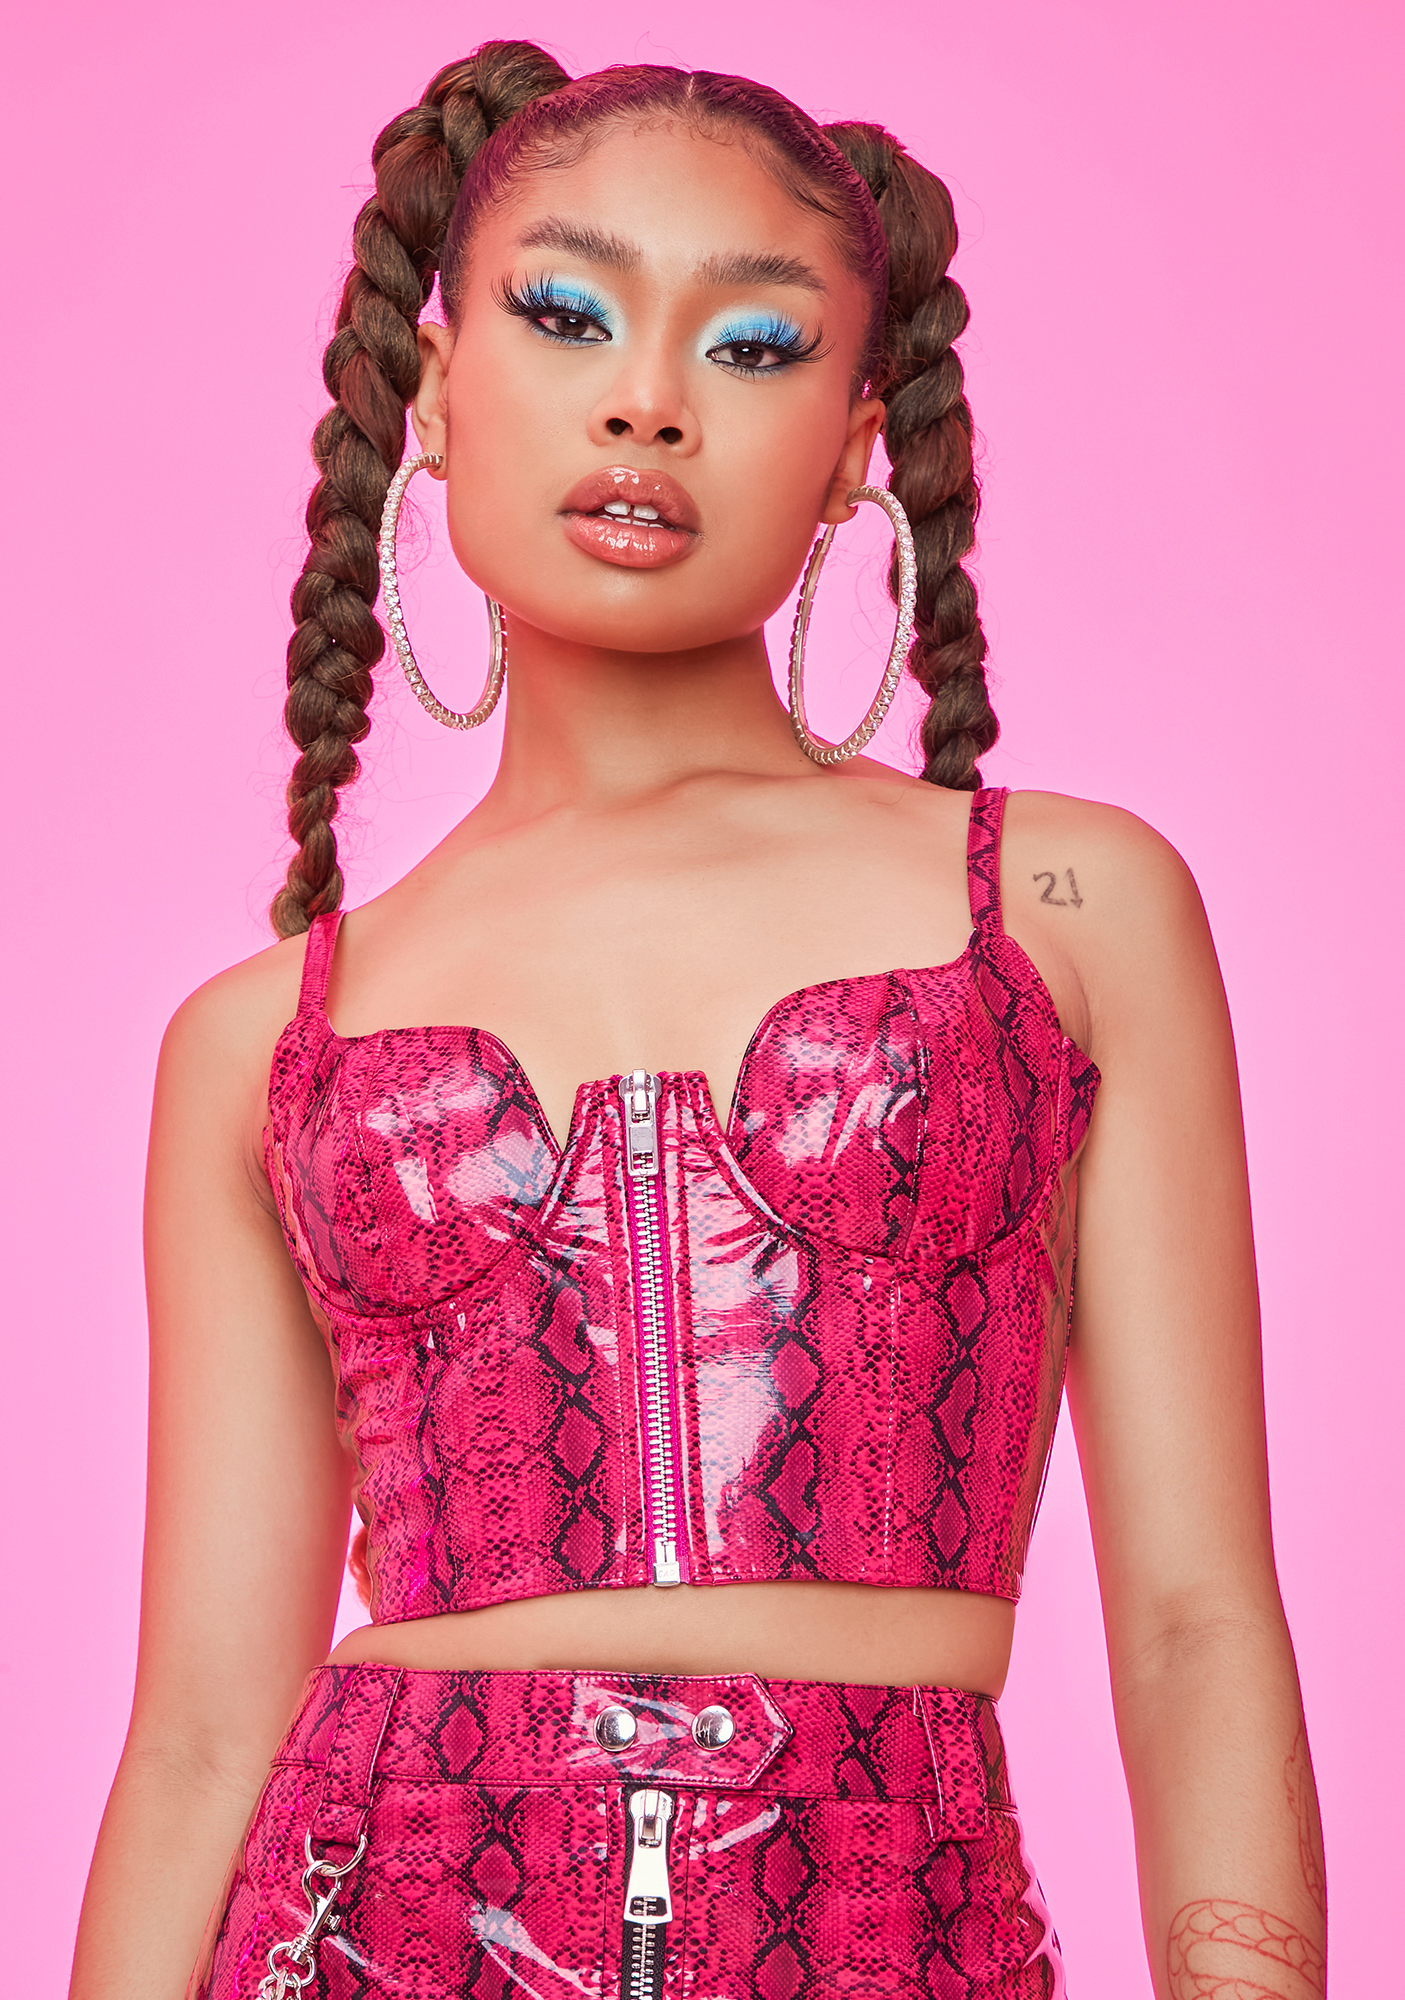 Horoscopez Snakeskin Bustier Zip Up Bralette - Pink | Dolls Kill